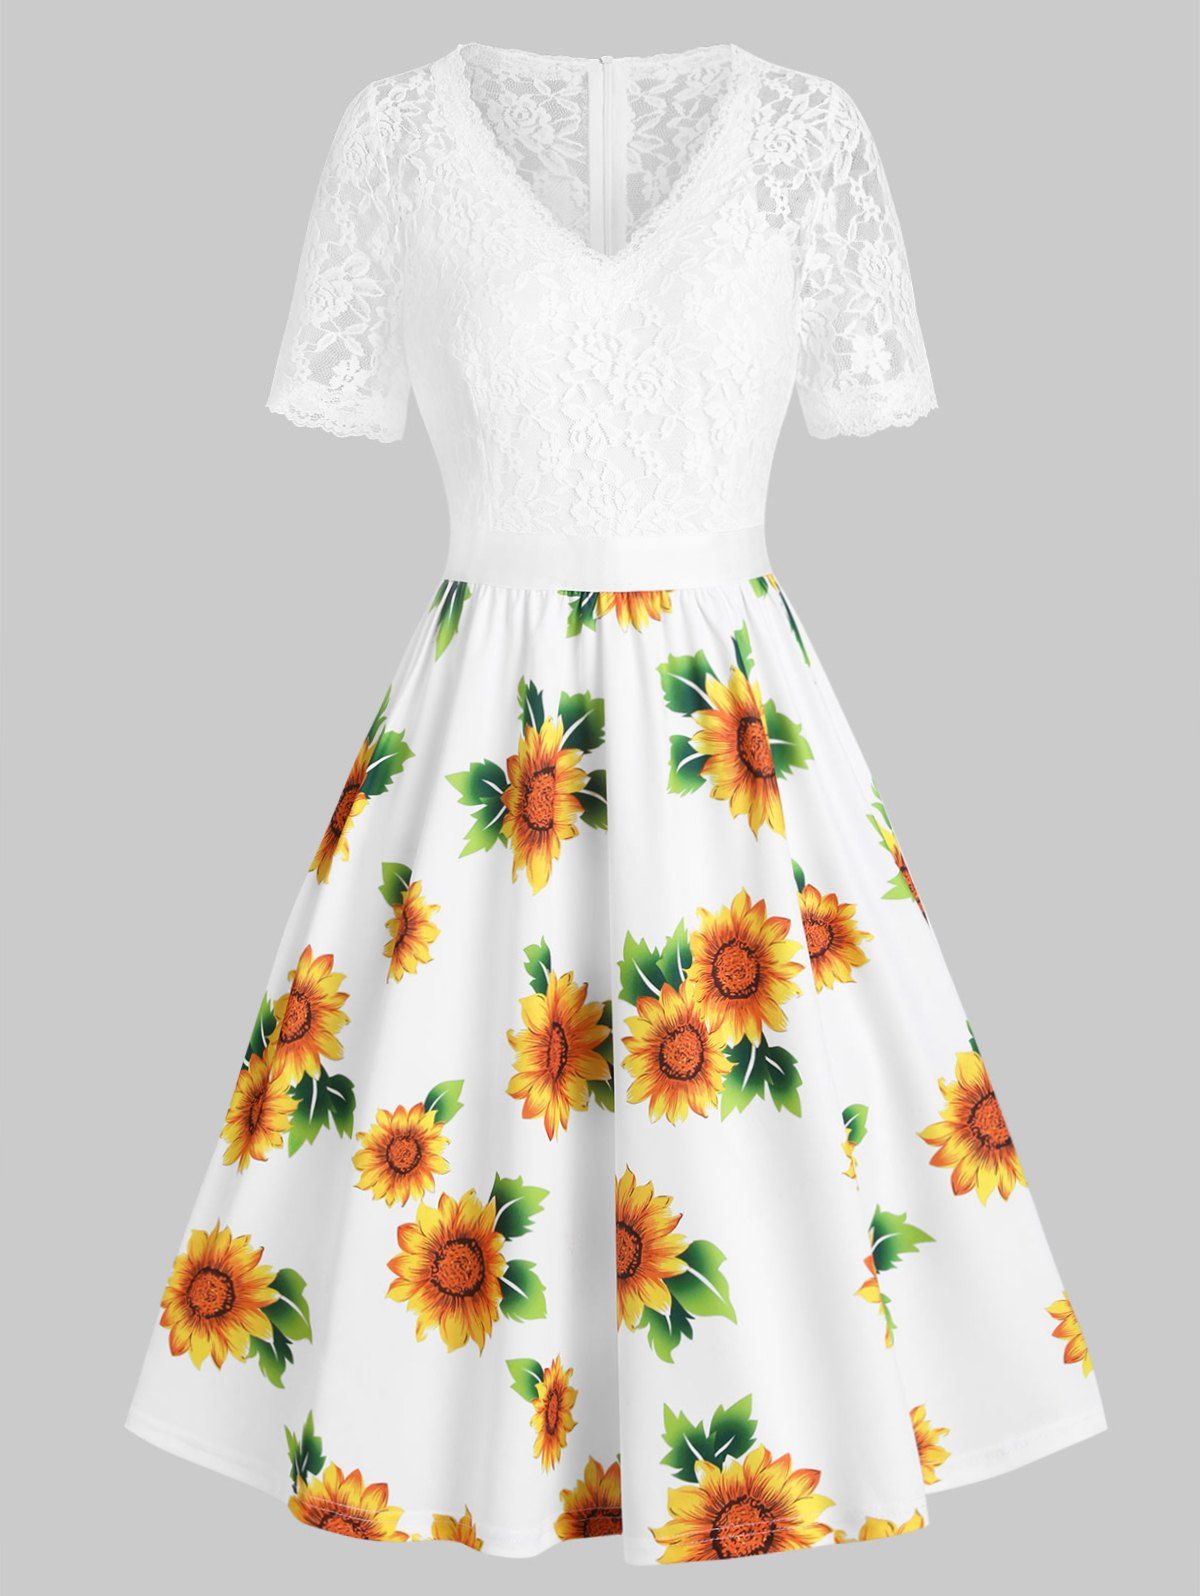 Summer Vacation Sunflower Print Rose Lace Insert V Neck A Line Dress - multicolor XXL